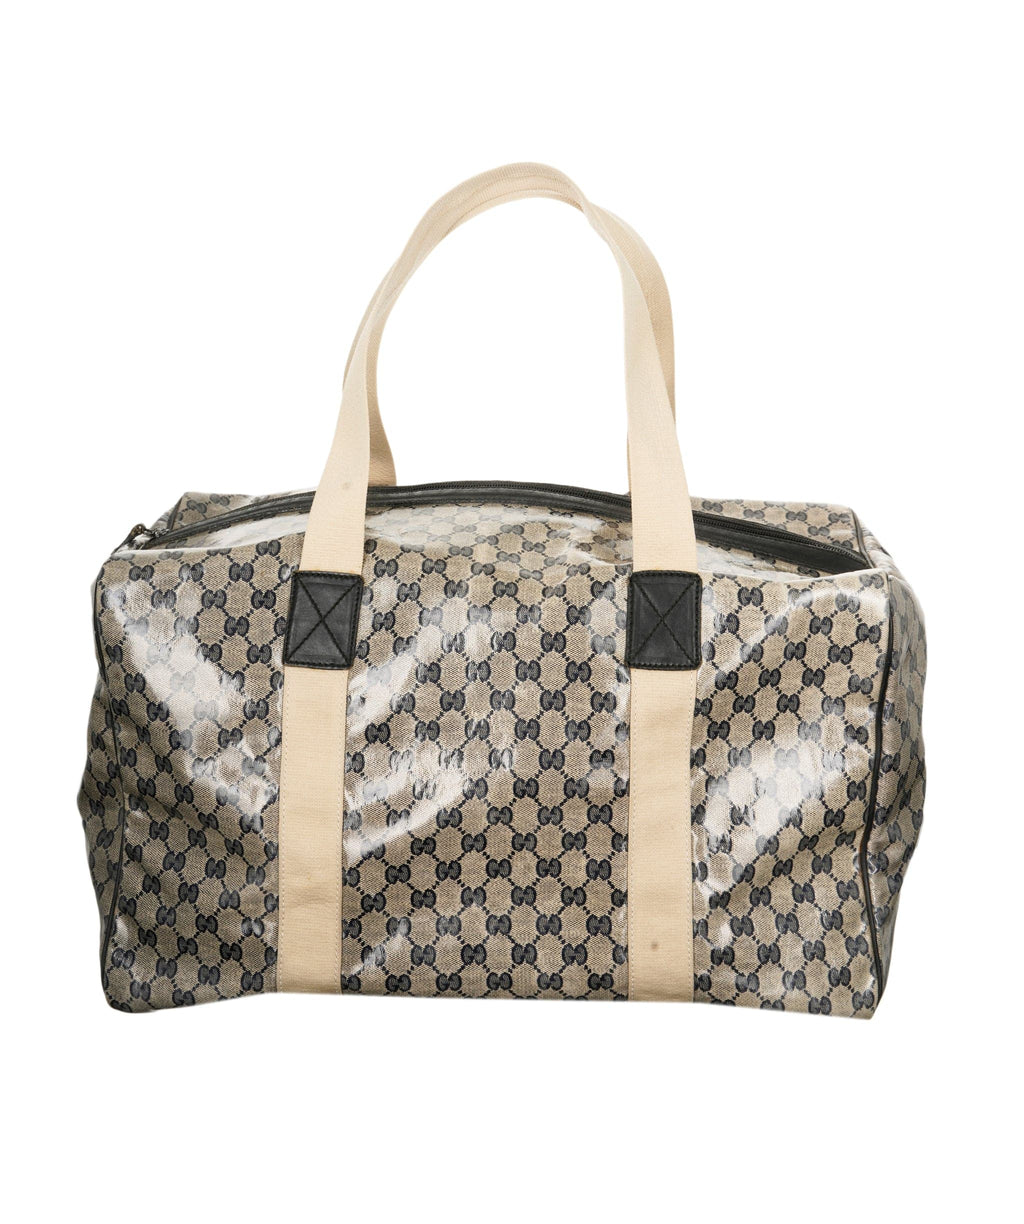 Gucci Small Jumbo GG Duffle Bag - Farfetch